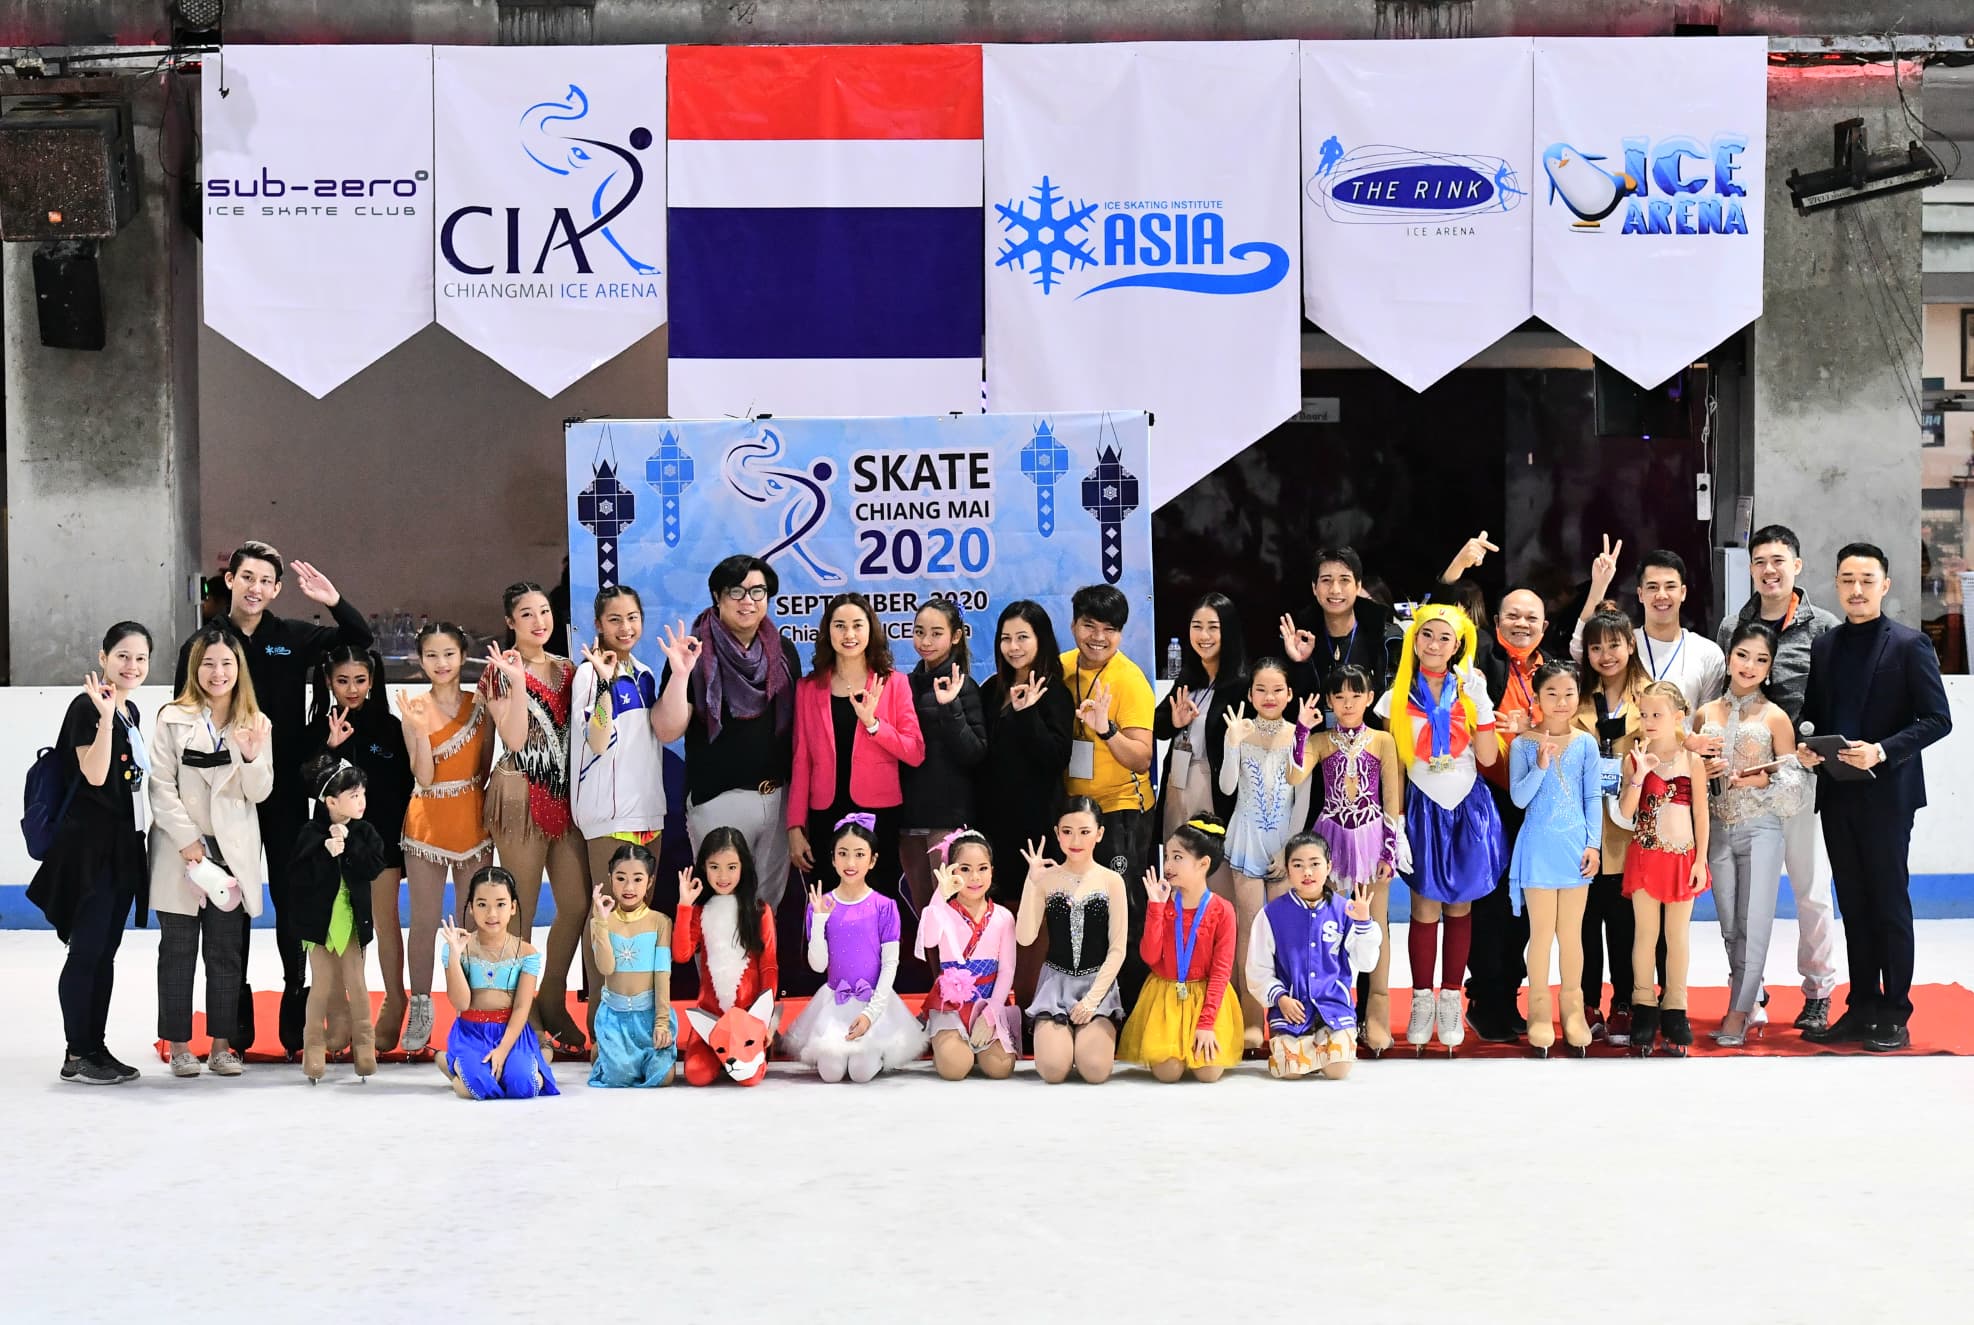 Skate Chiangmai 2020